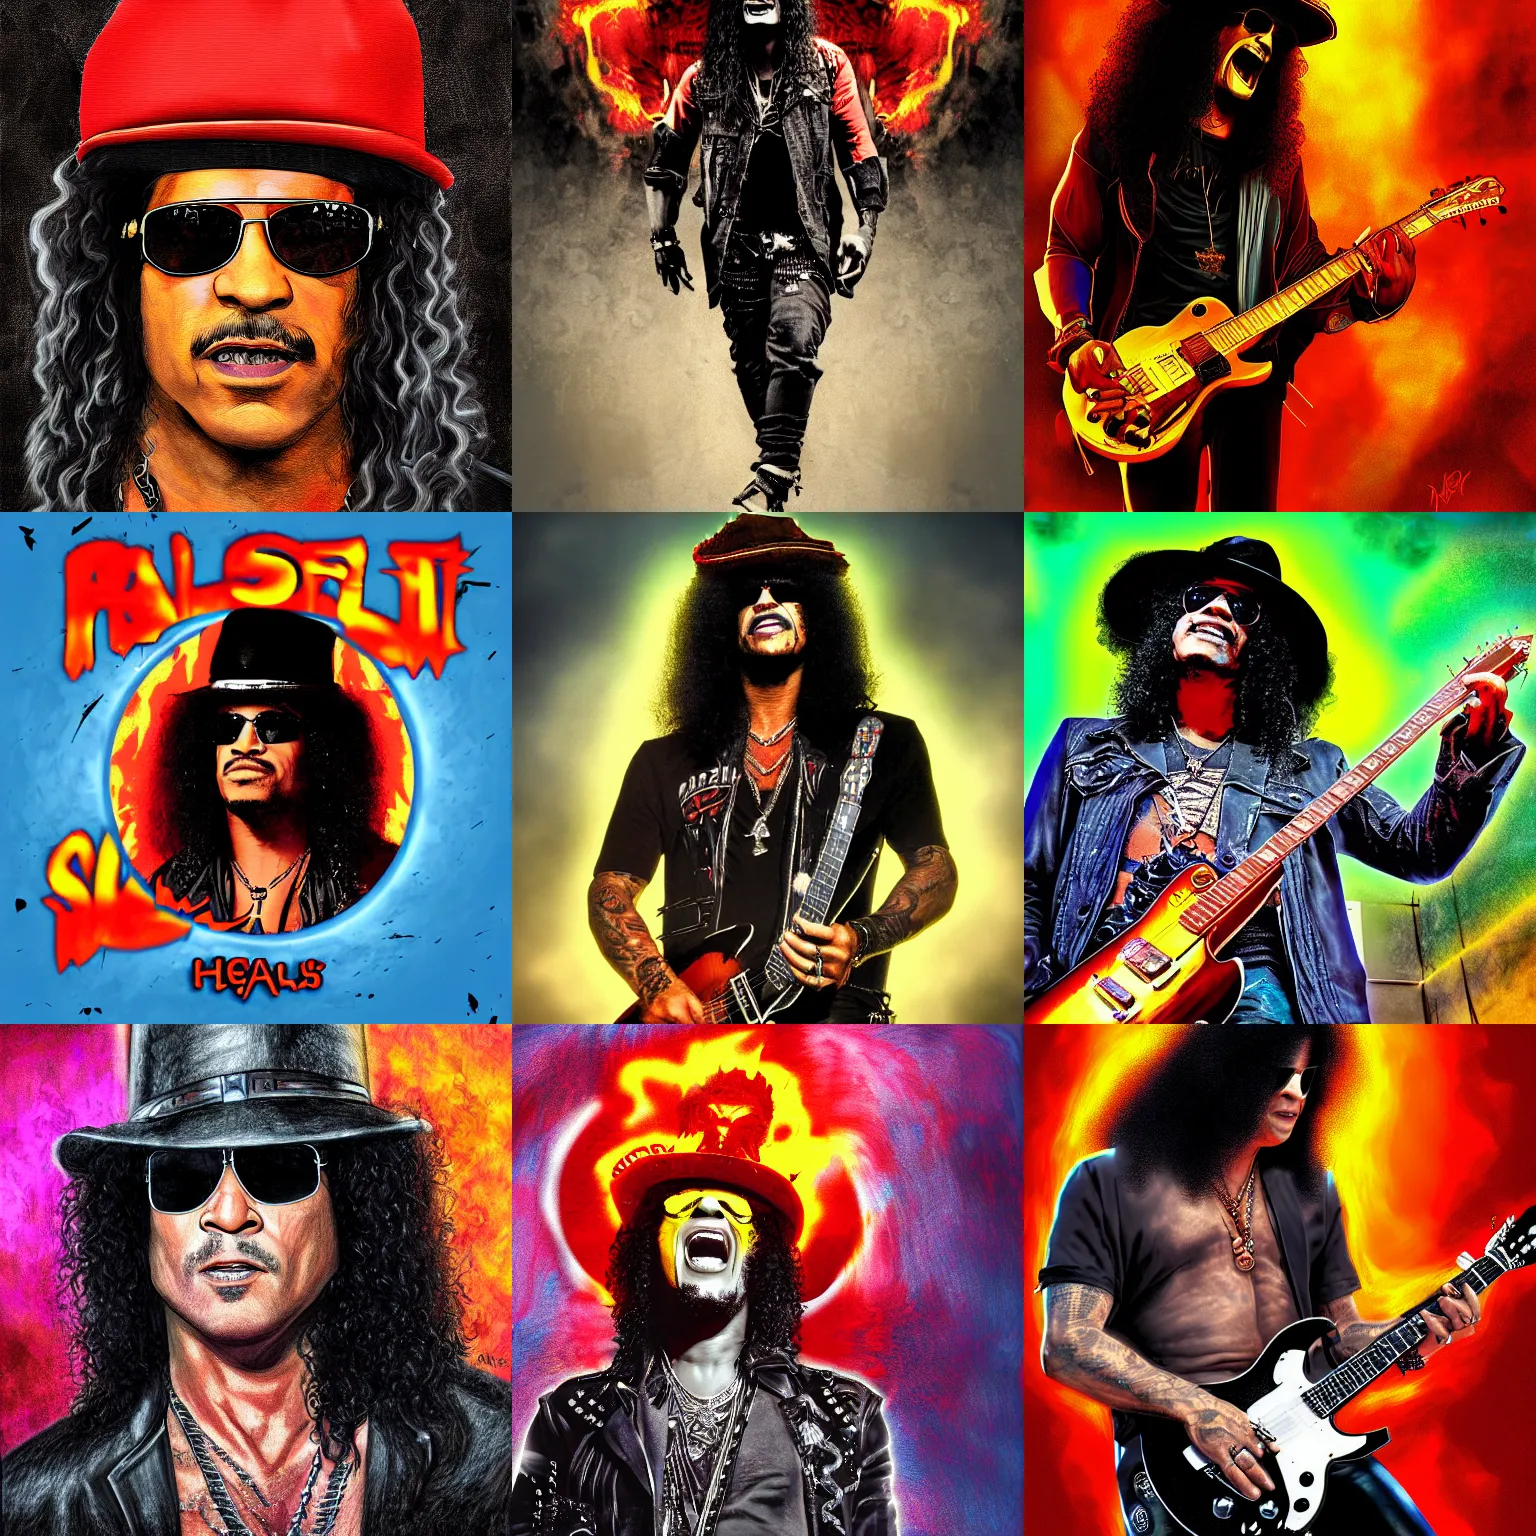 Prompt: portrait of Slash in hell, high quality, digital art